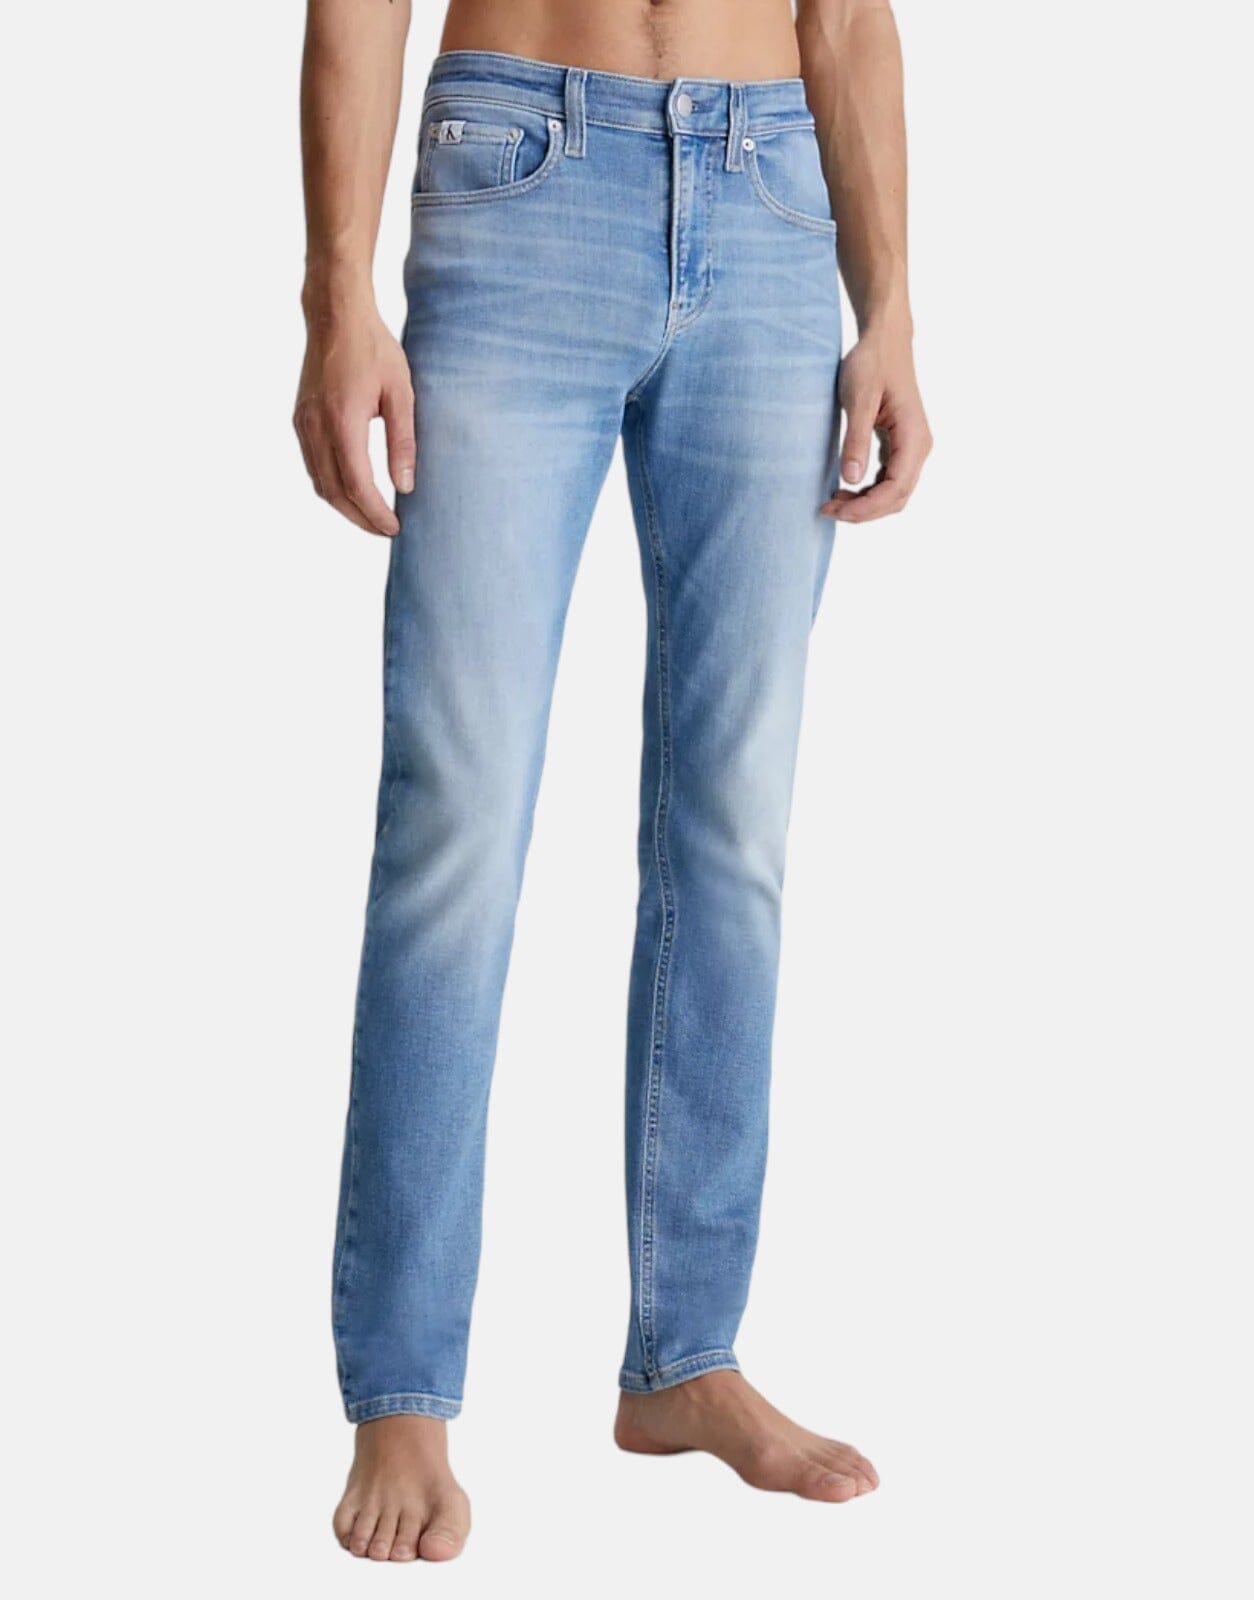 Calvin Klein Skinny Medium Blue Jeans - Subwear